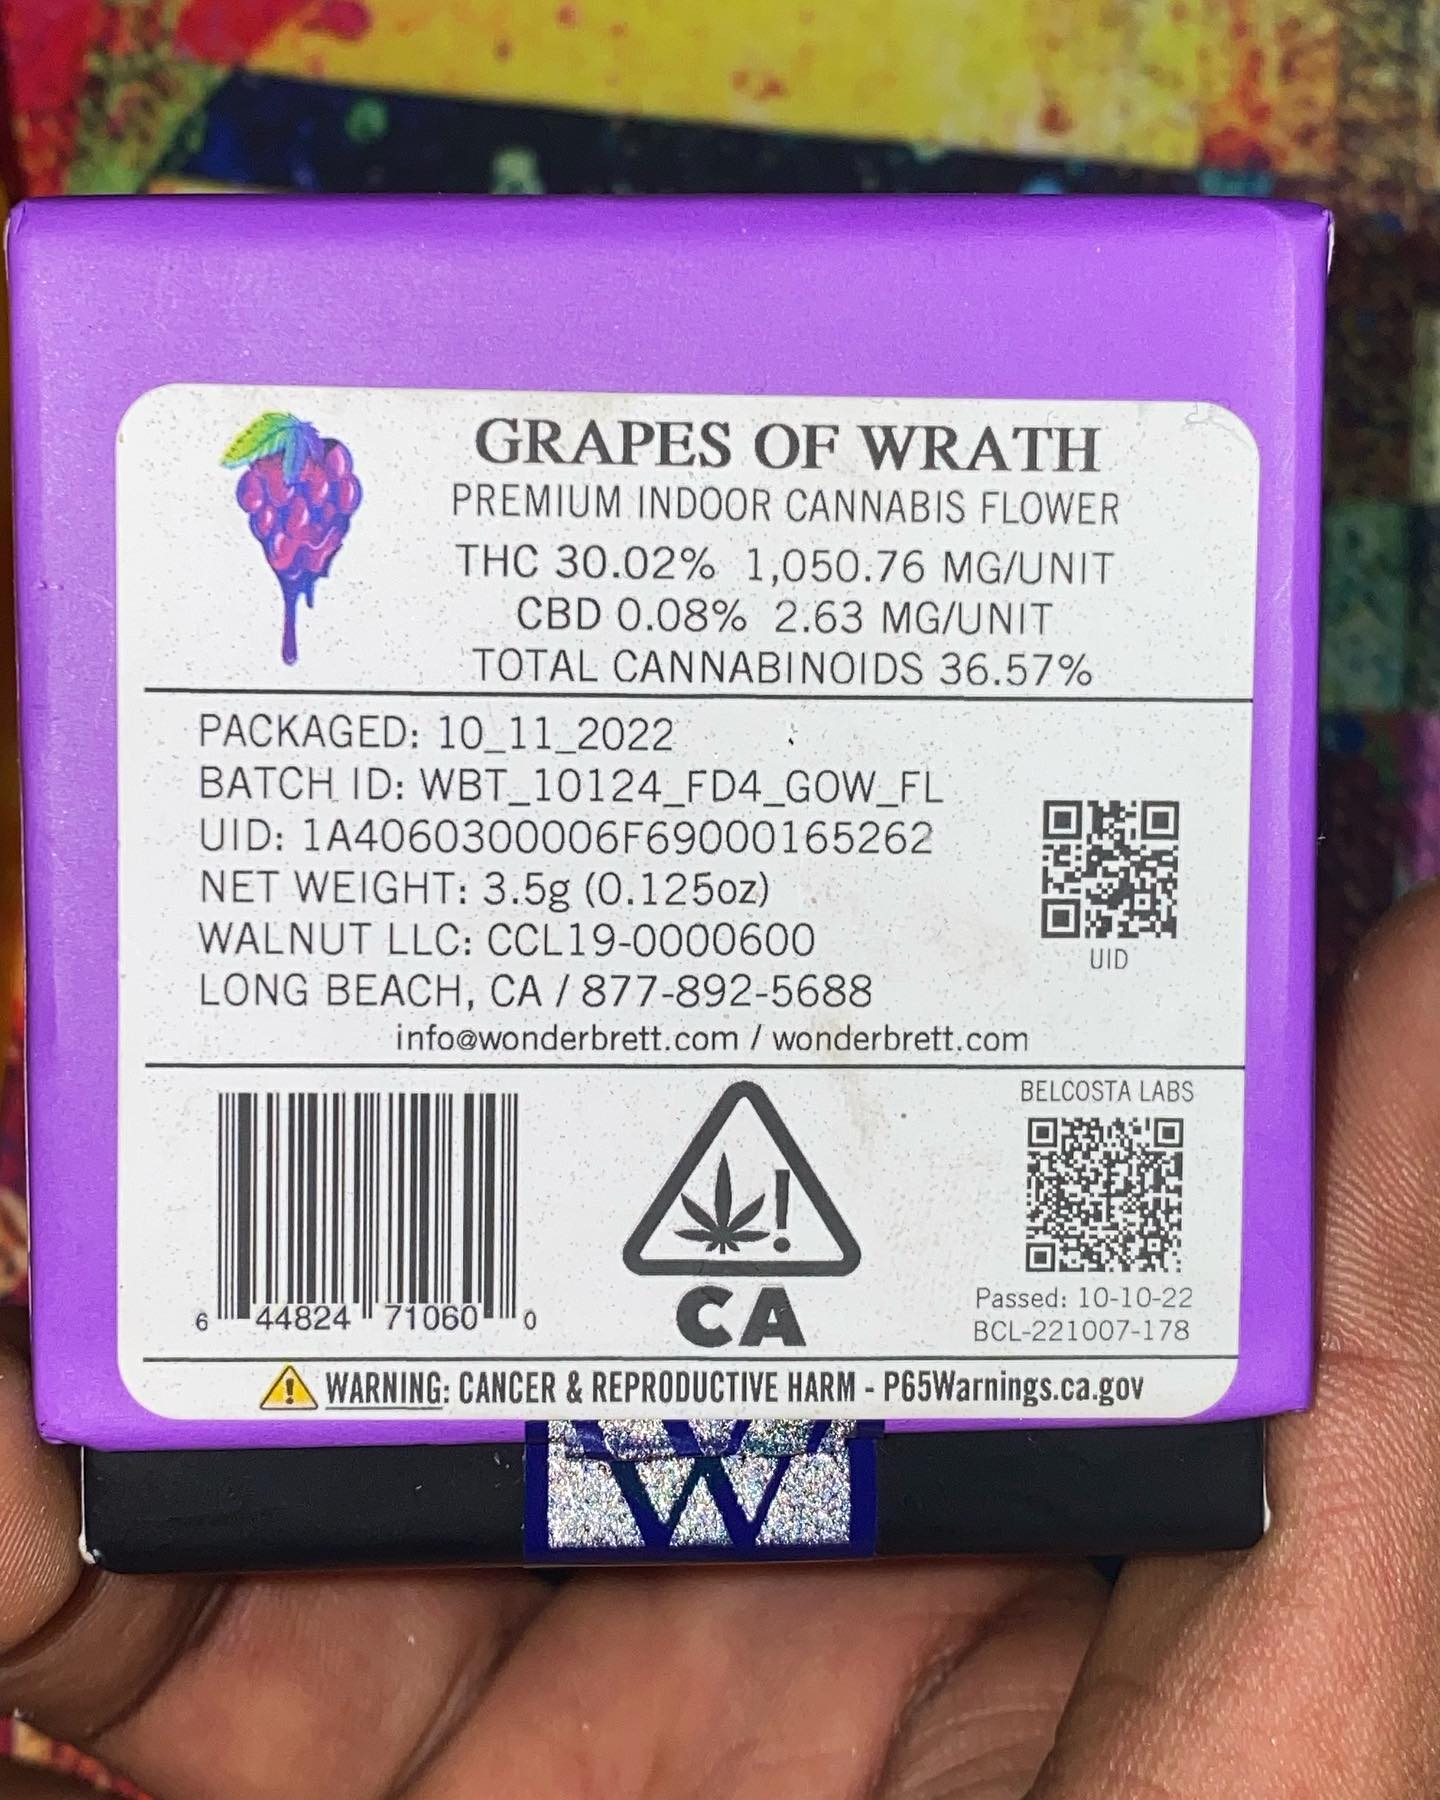 grapes of wrath by wonderbrett strain review by dopamine